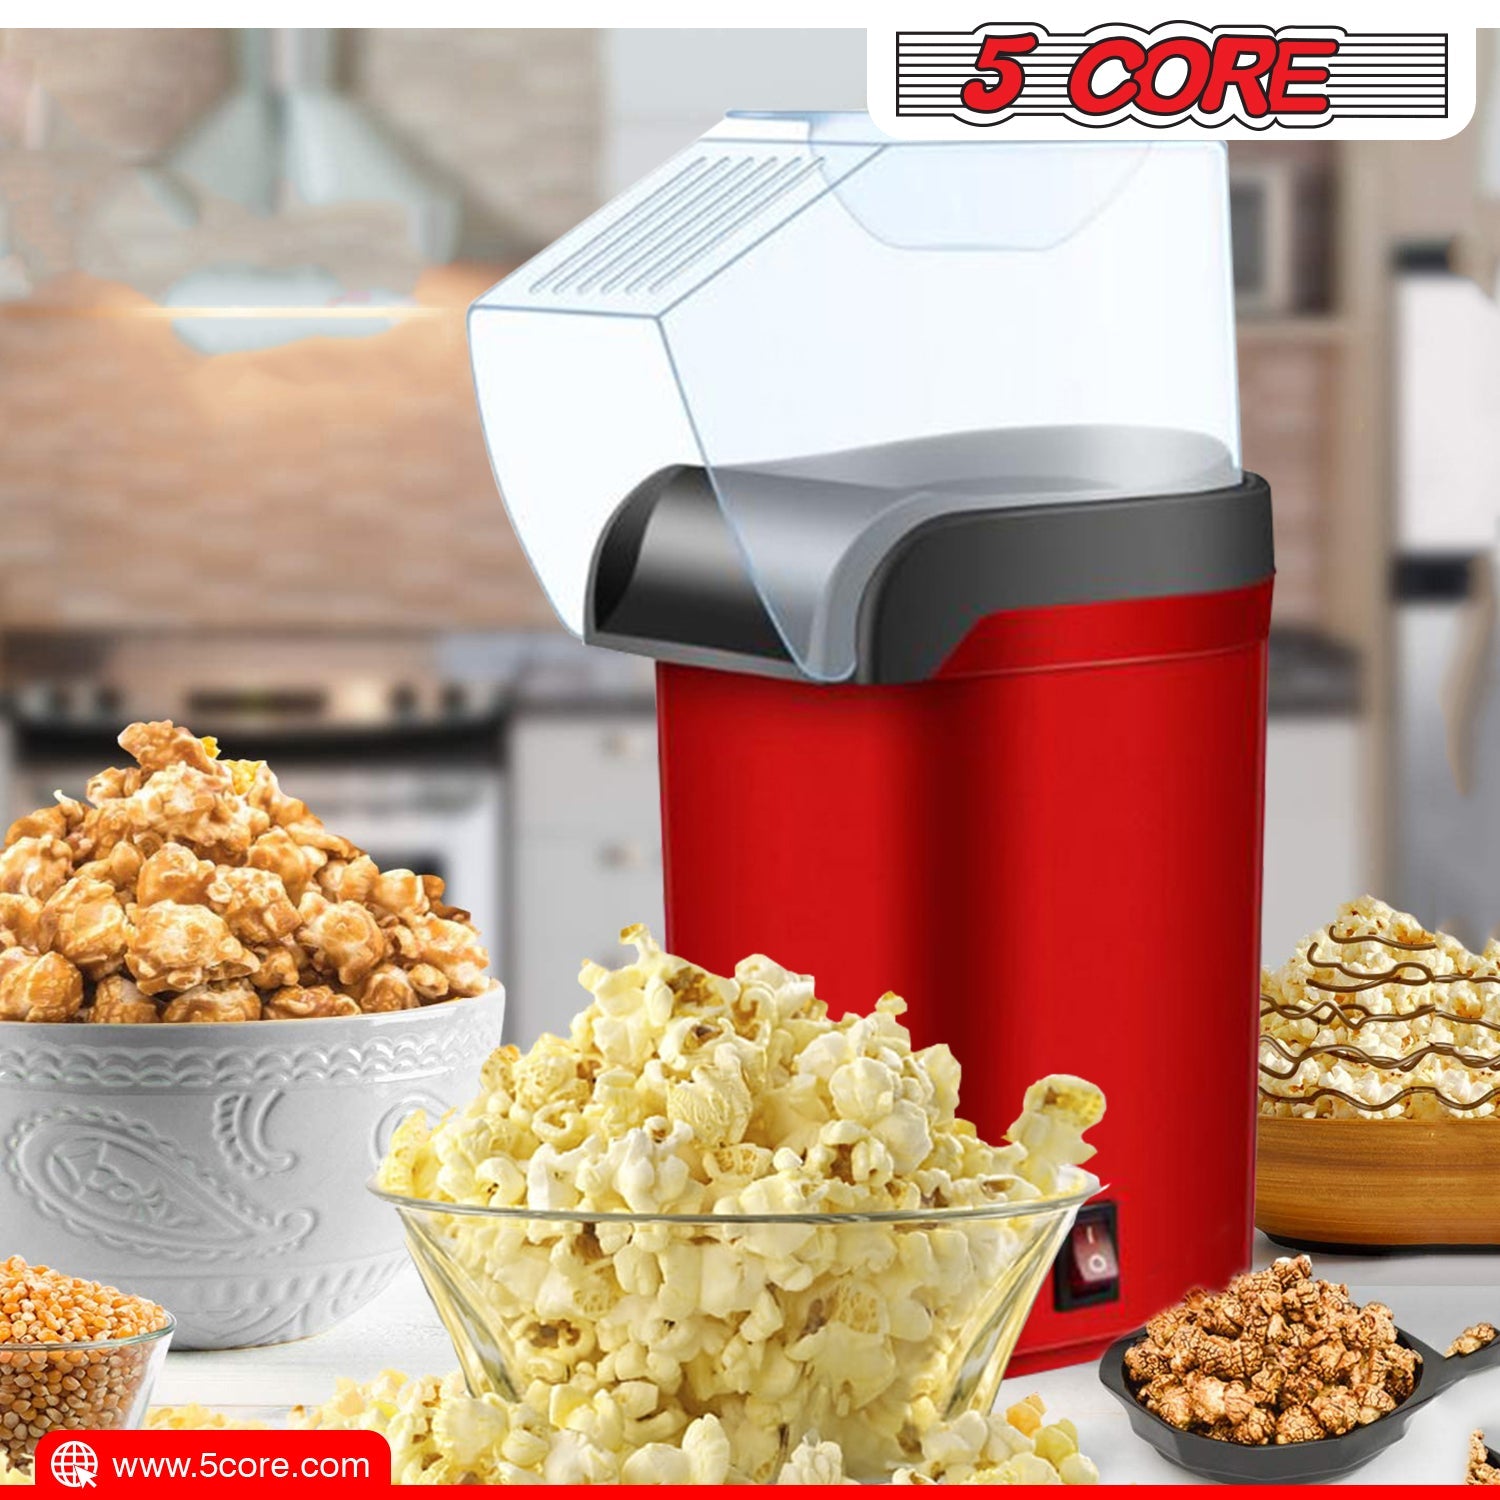 5 Core Popcorn Machine Yellow Capacity 16Cups Hot Air Popcorn Popper Maker Compact Pop Corn Machine